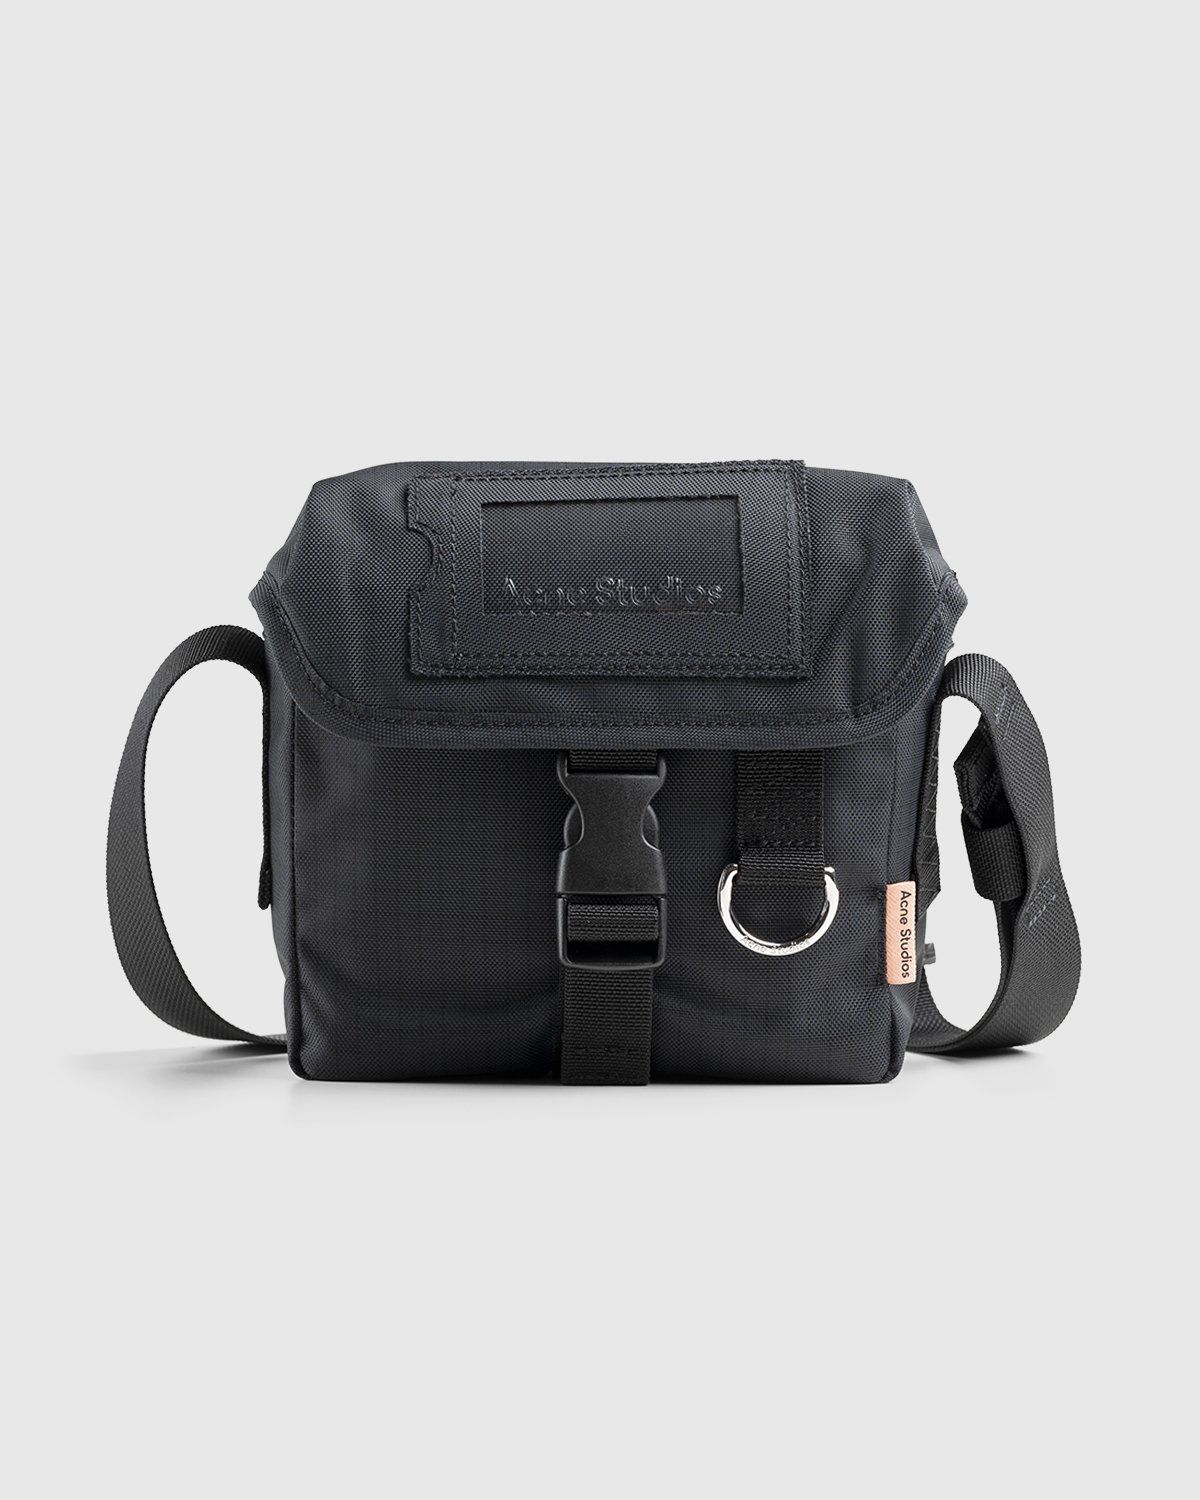 Acne Studios – Small Messenger Bag Black - Bags - Black - Image 1